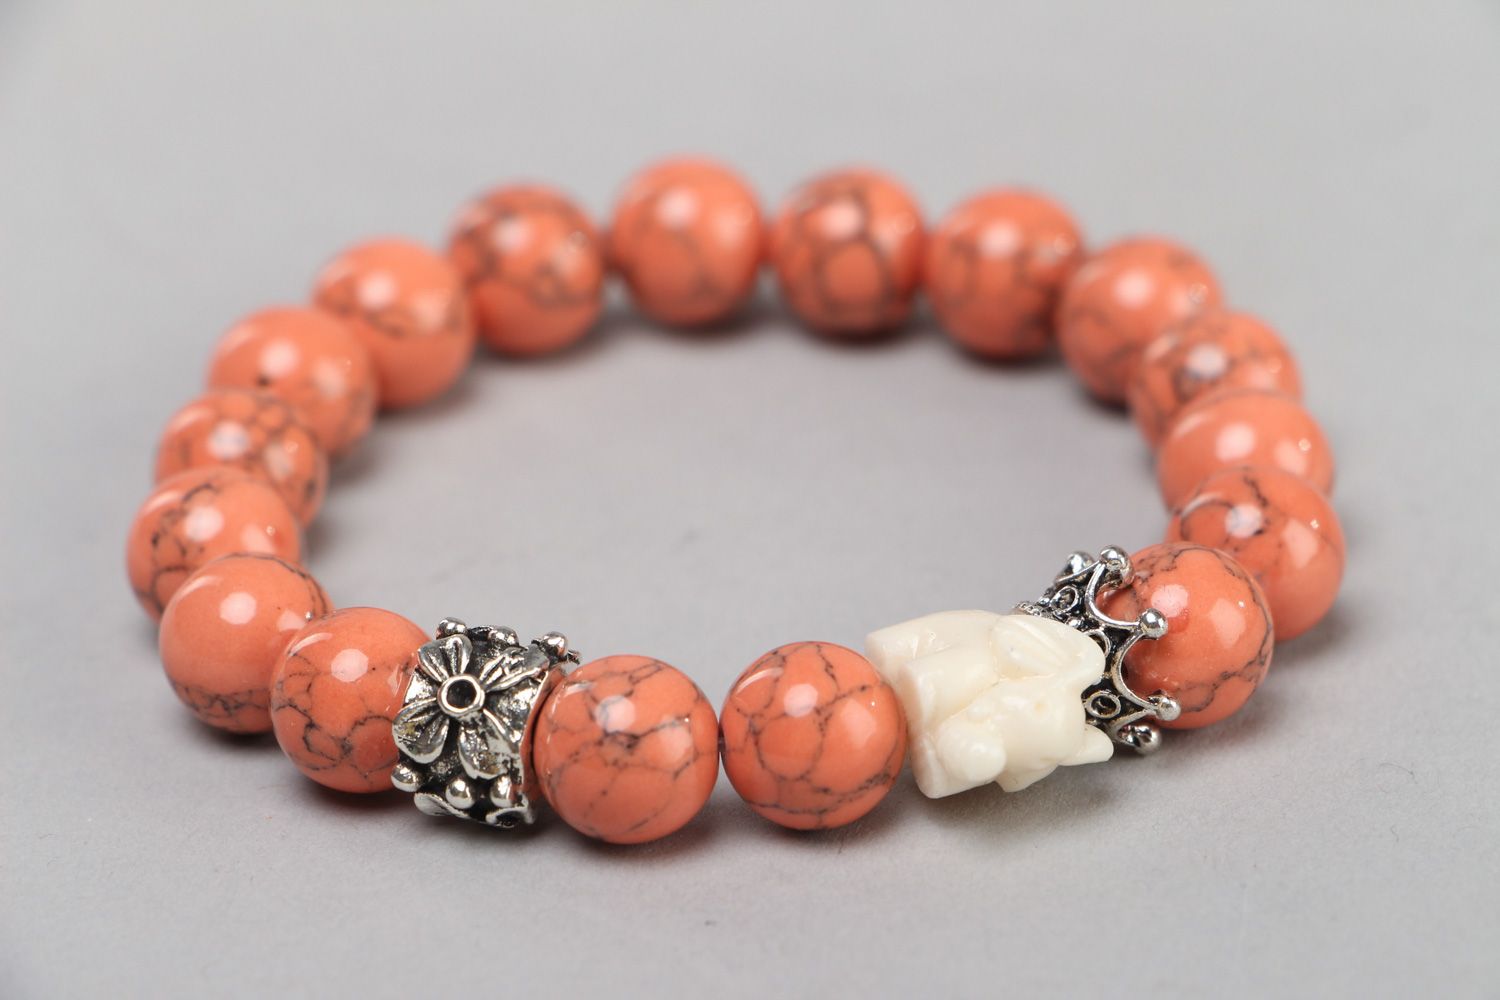 Handmade stretch wrist bracelet with natural coral beads and elephant figurine photo 1